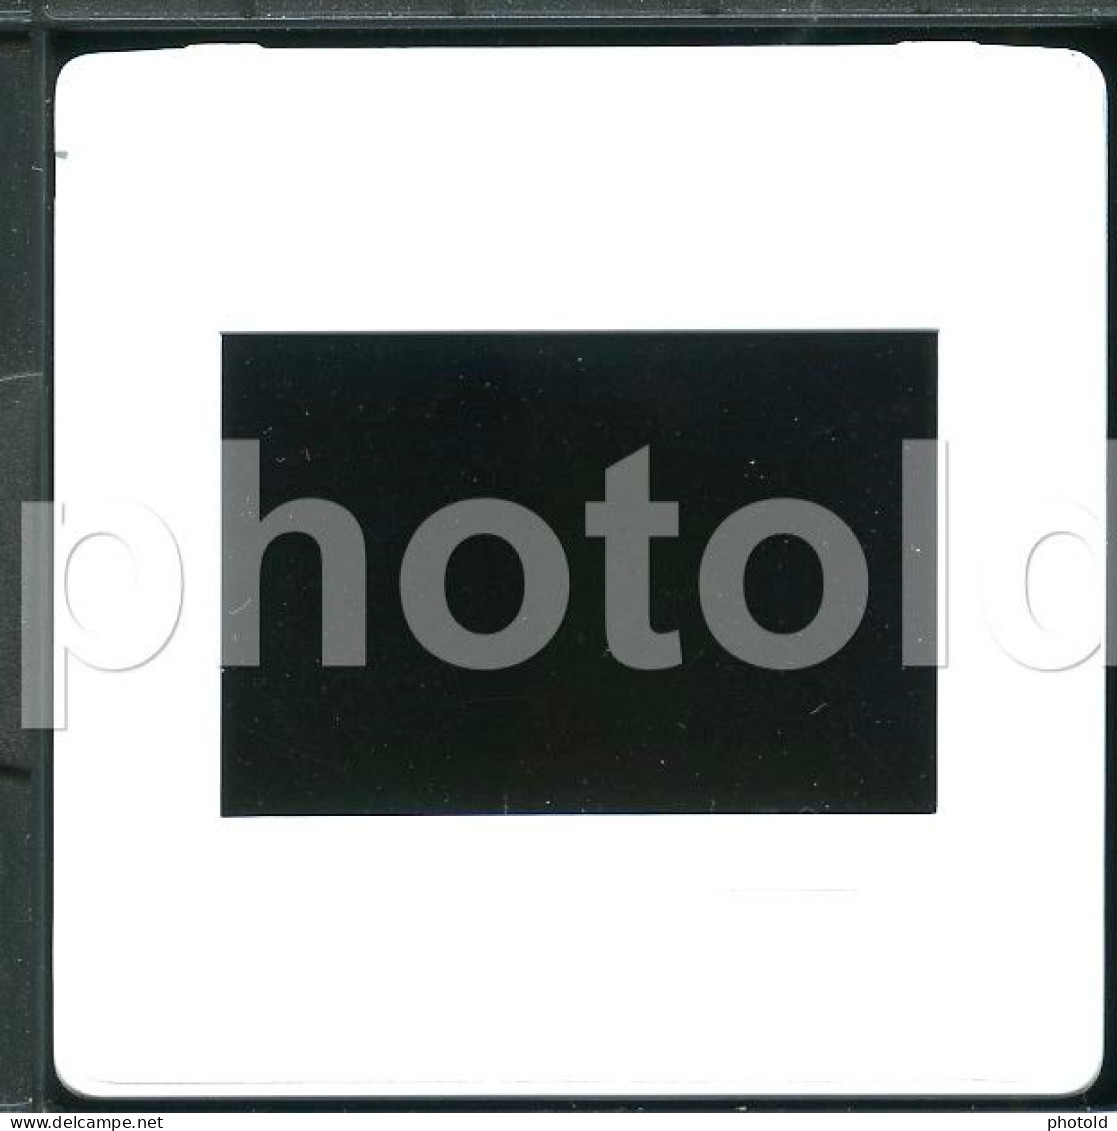 1984 FERRY CAMINHA MINHO PORTUGAL AMATEUR 35mm DIAPOSITIVE SLIDE Not PHOTO No FOTO NB3900 - Diapositives